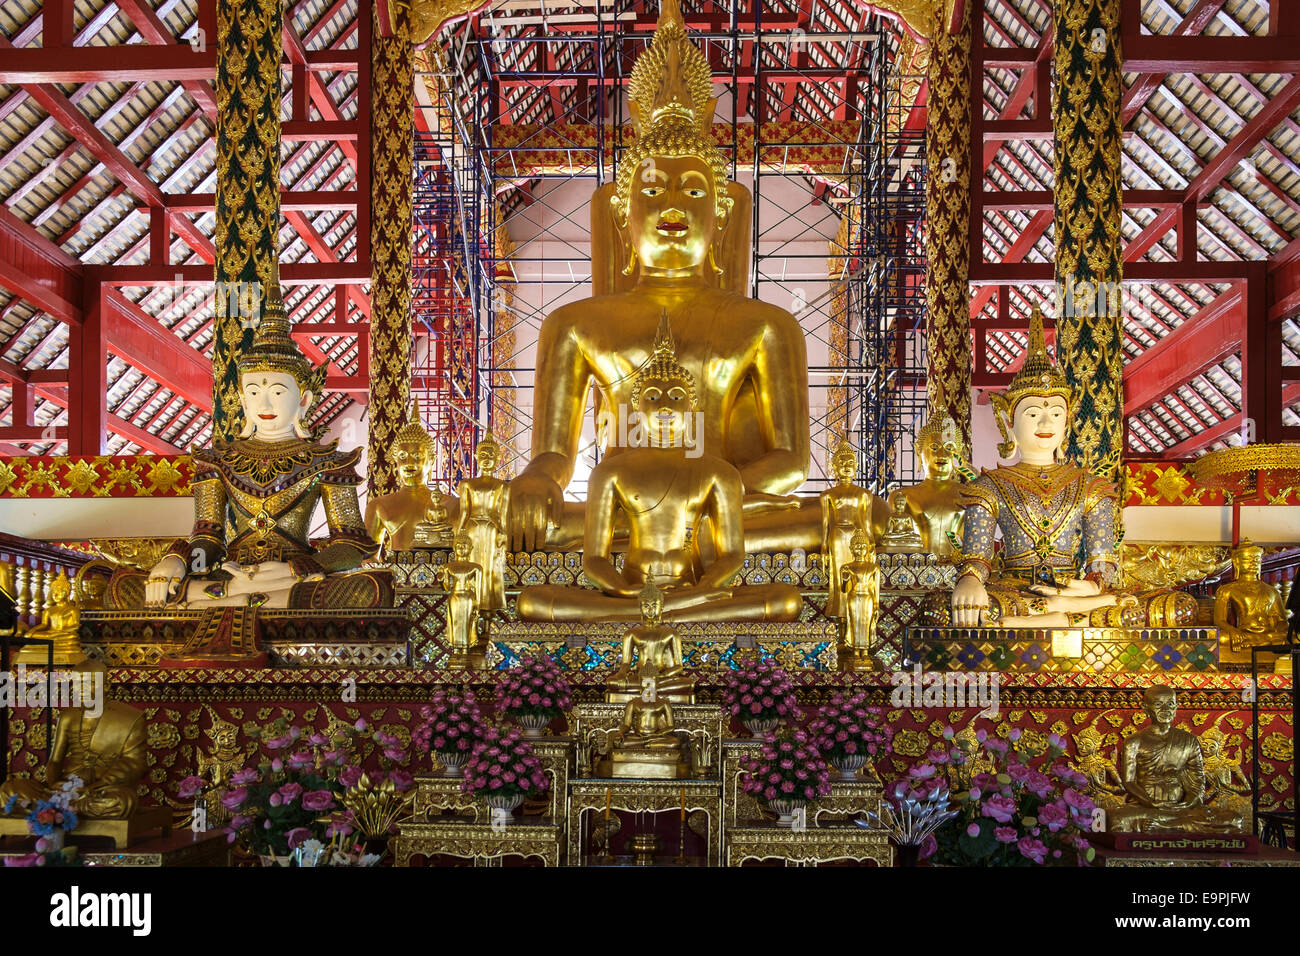 Goldene Buddha statue at Viharn Luang temple, Chiang Mai, Thailand Stock Photo